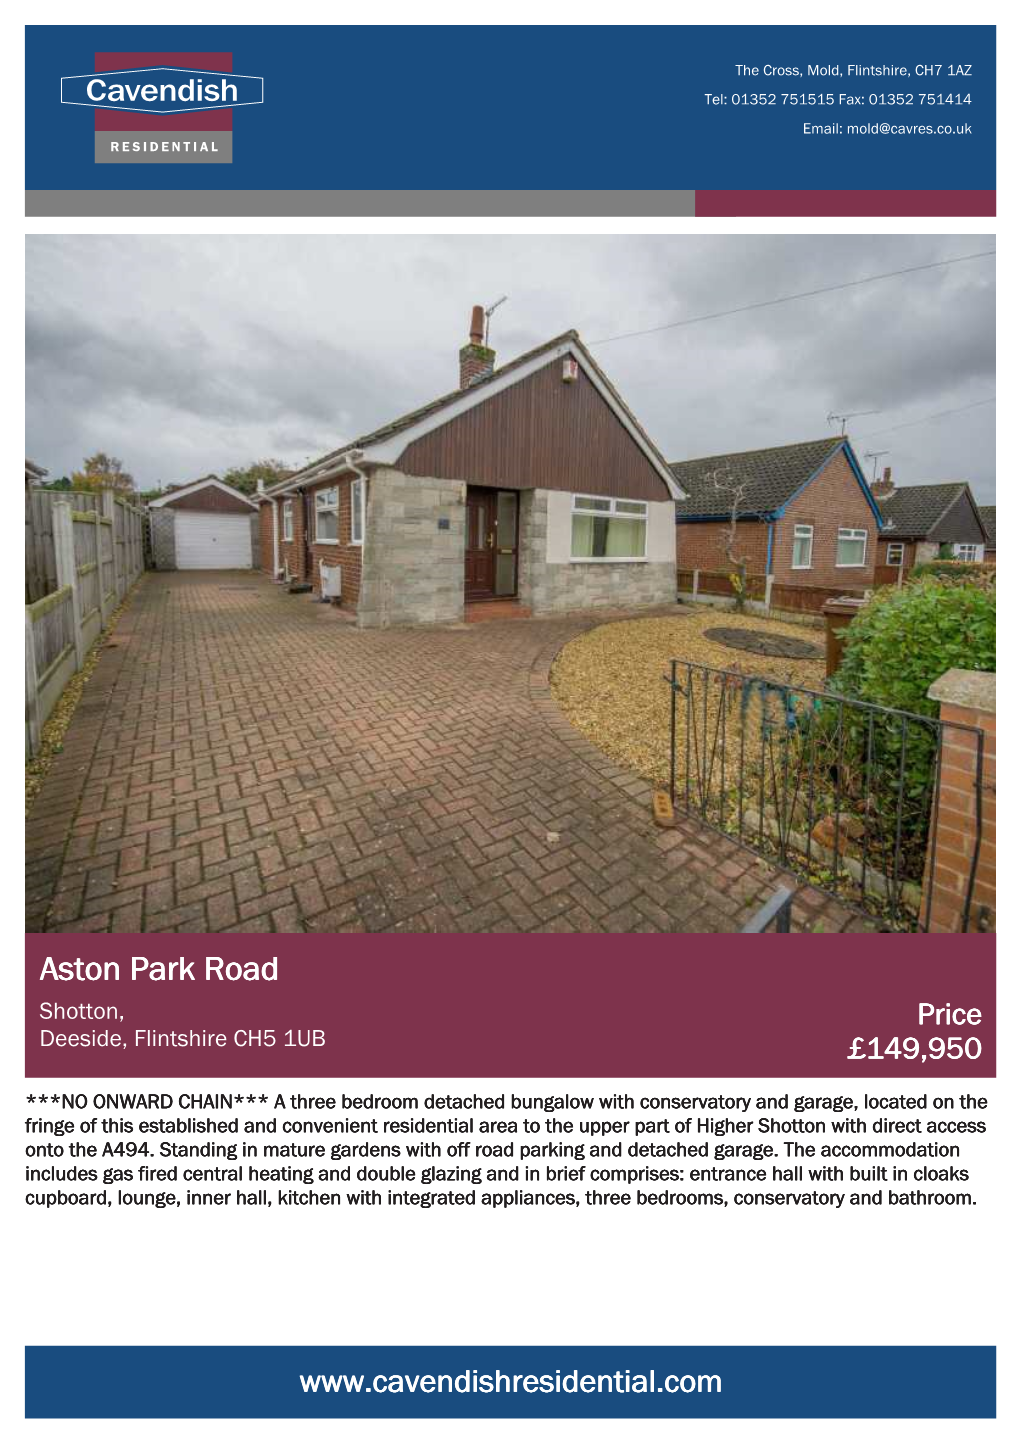 Aston Park Road Shotton, Price Deeside, Flintshire CH5 1UB £149,950